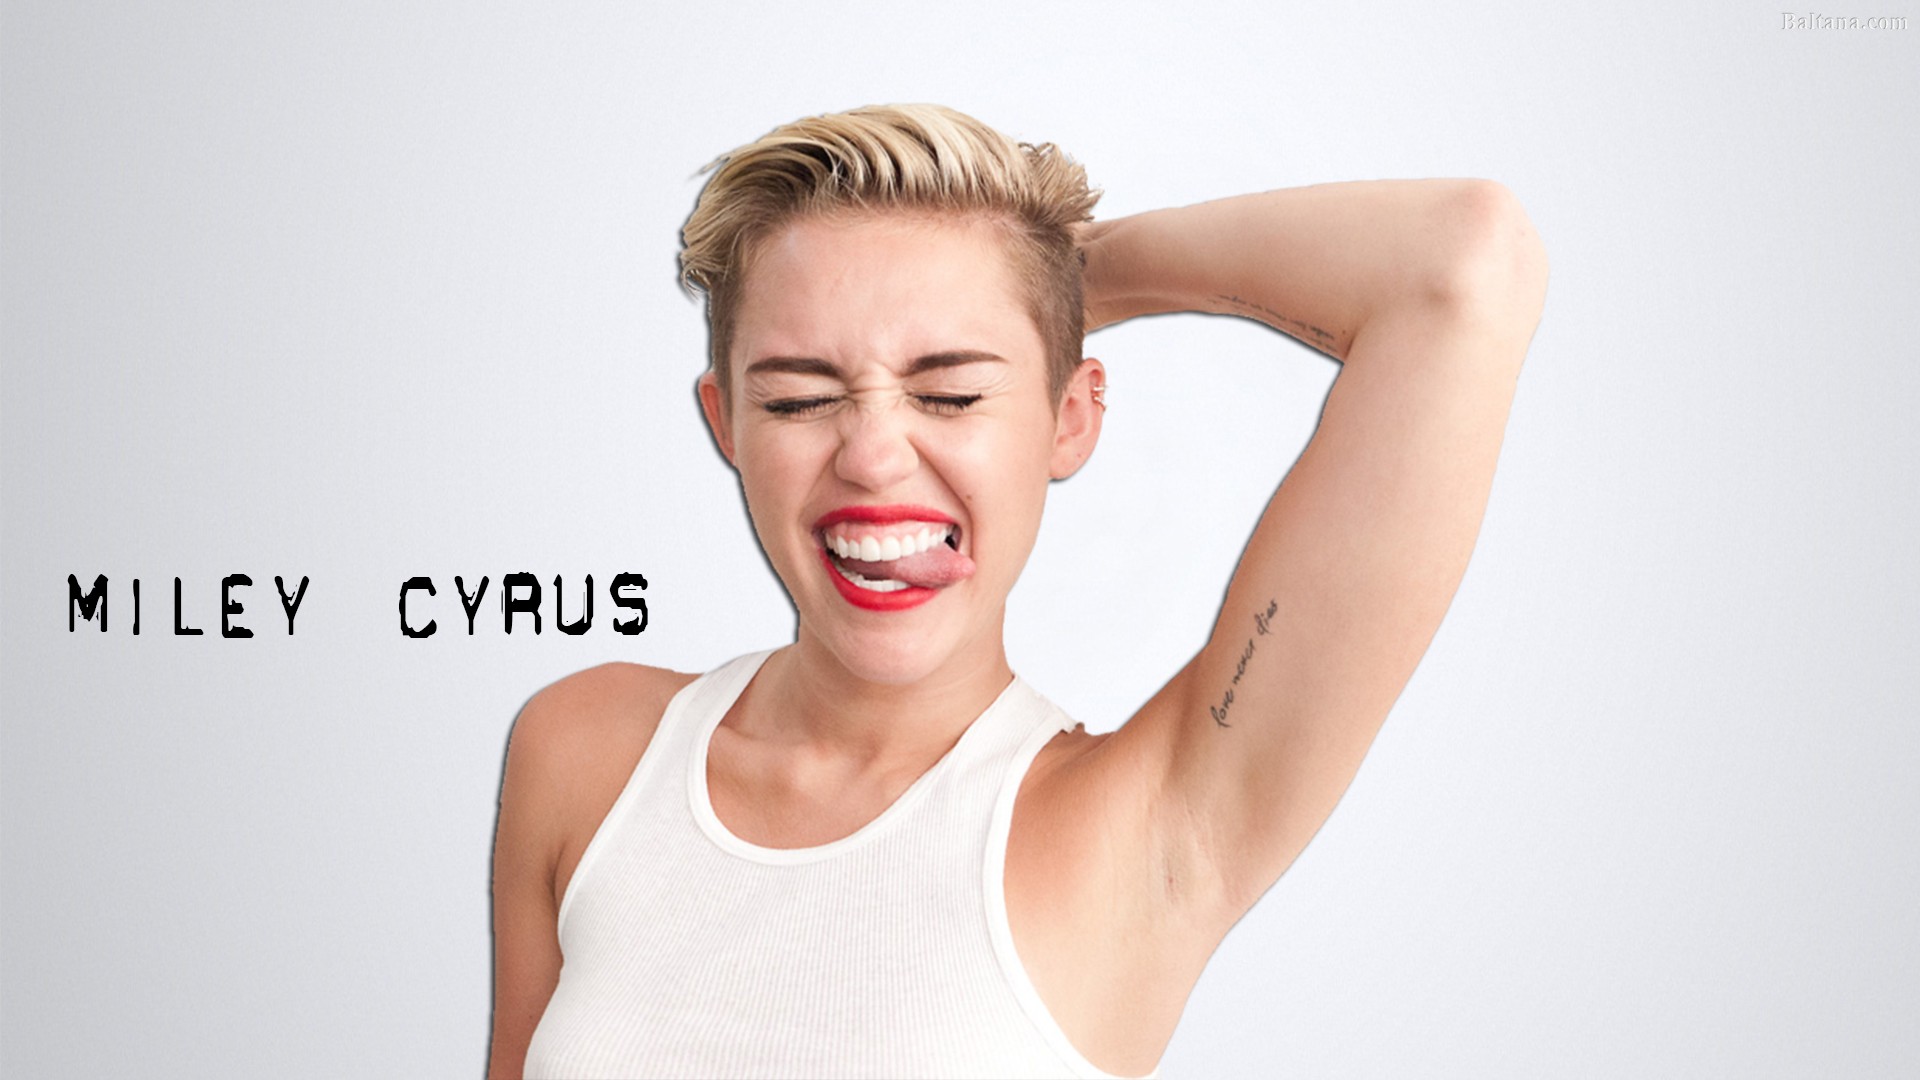 Miley Cyrus Wallpaper HD Background Image Pics Photos